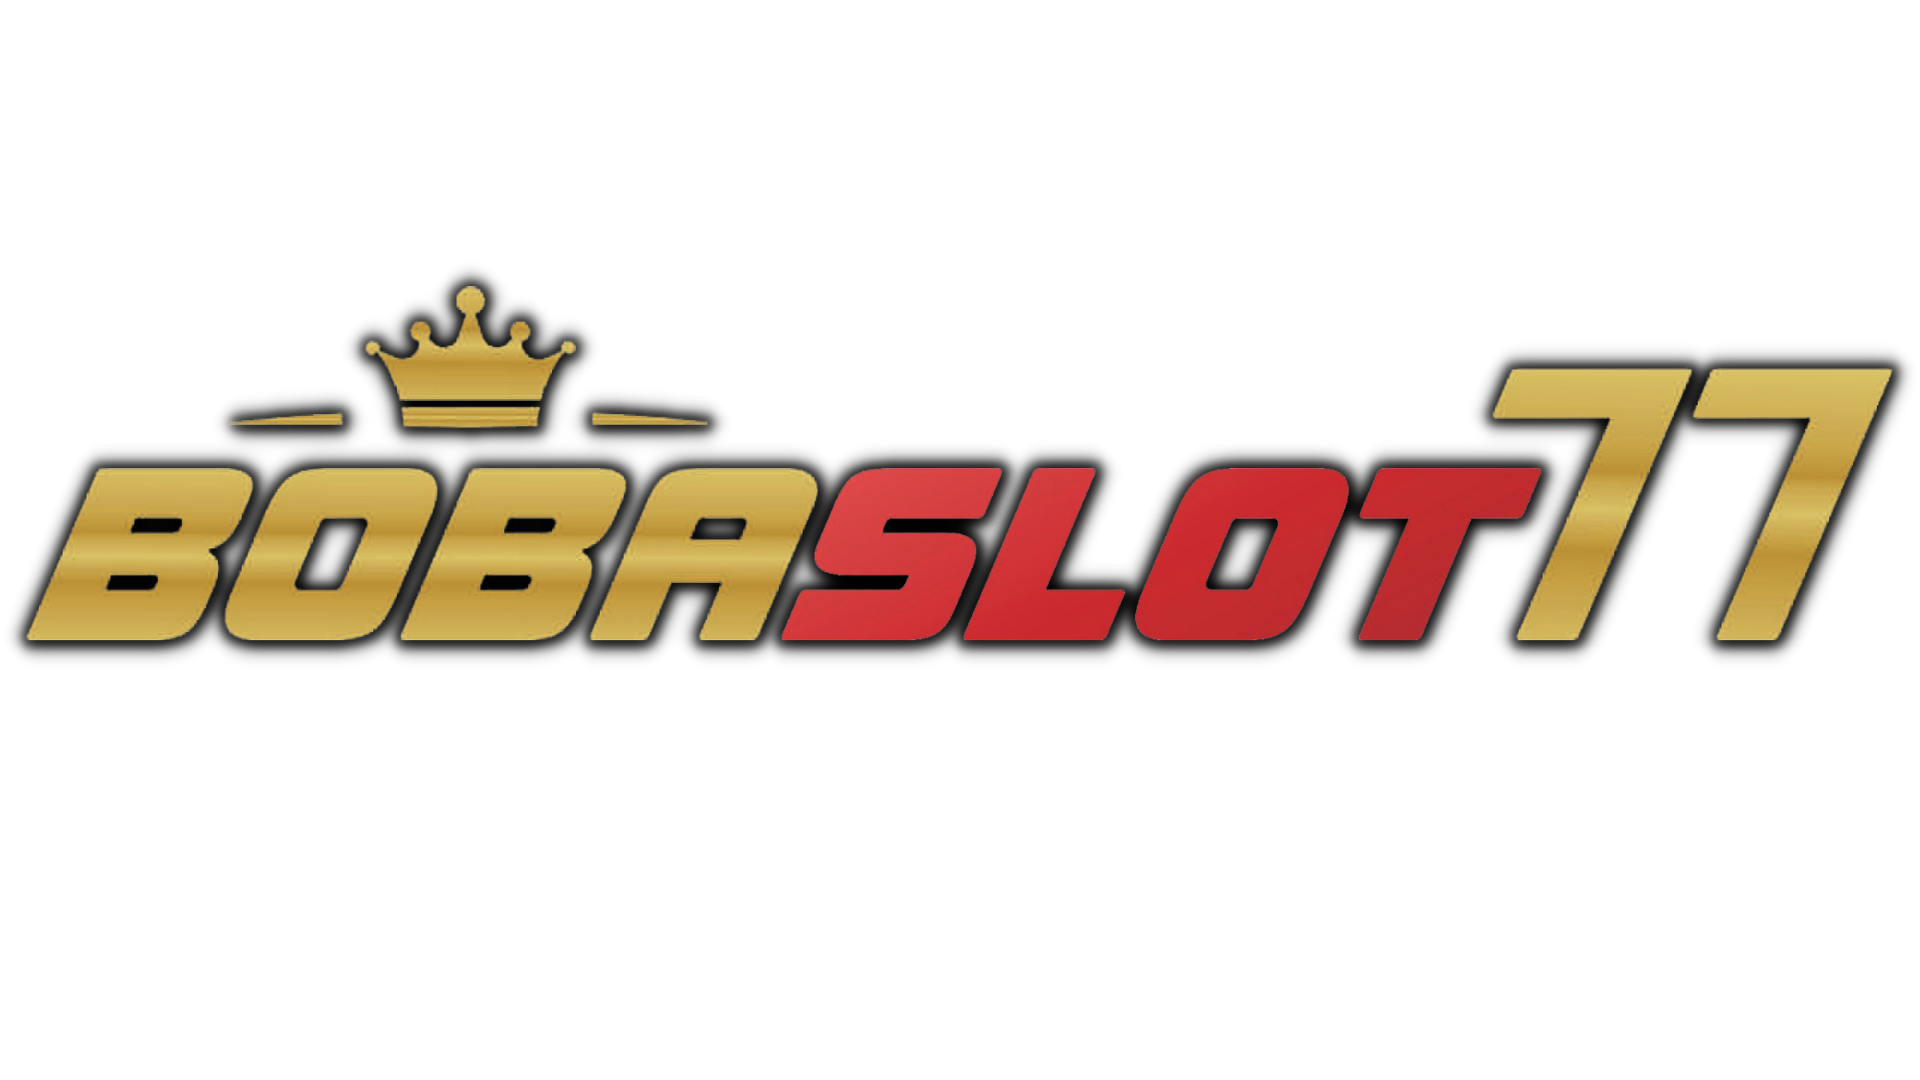 BOBASLOT77